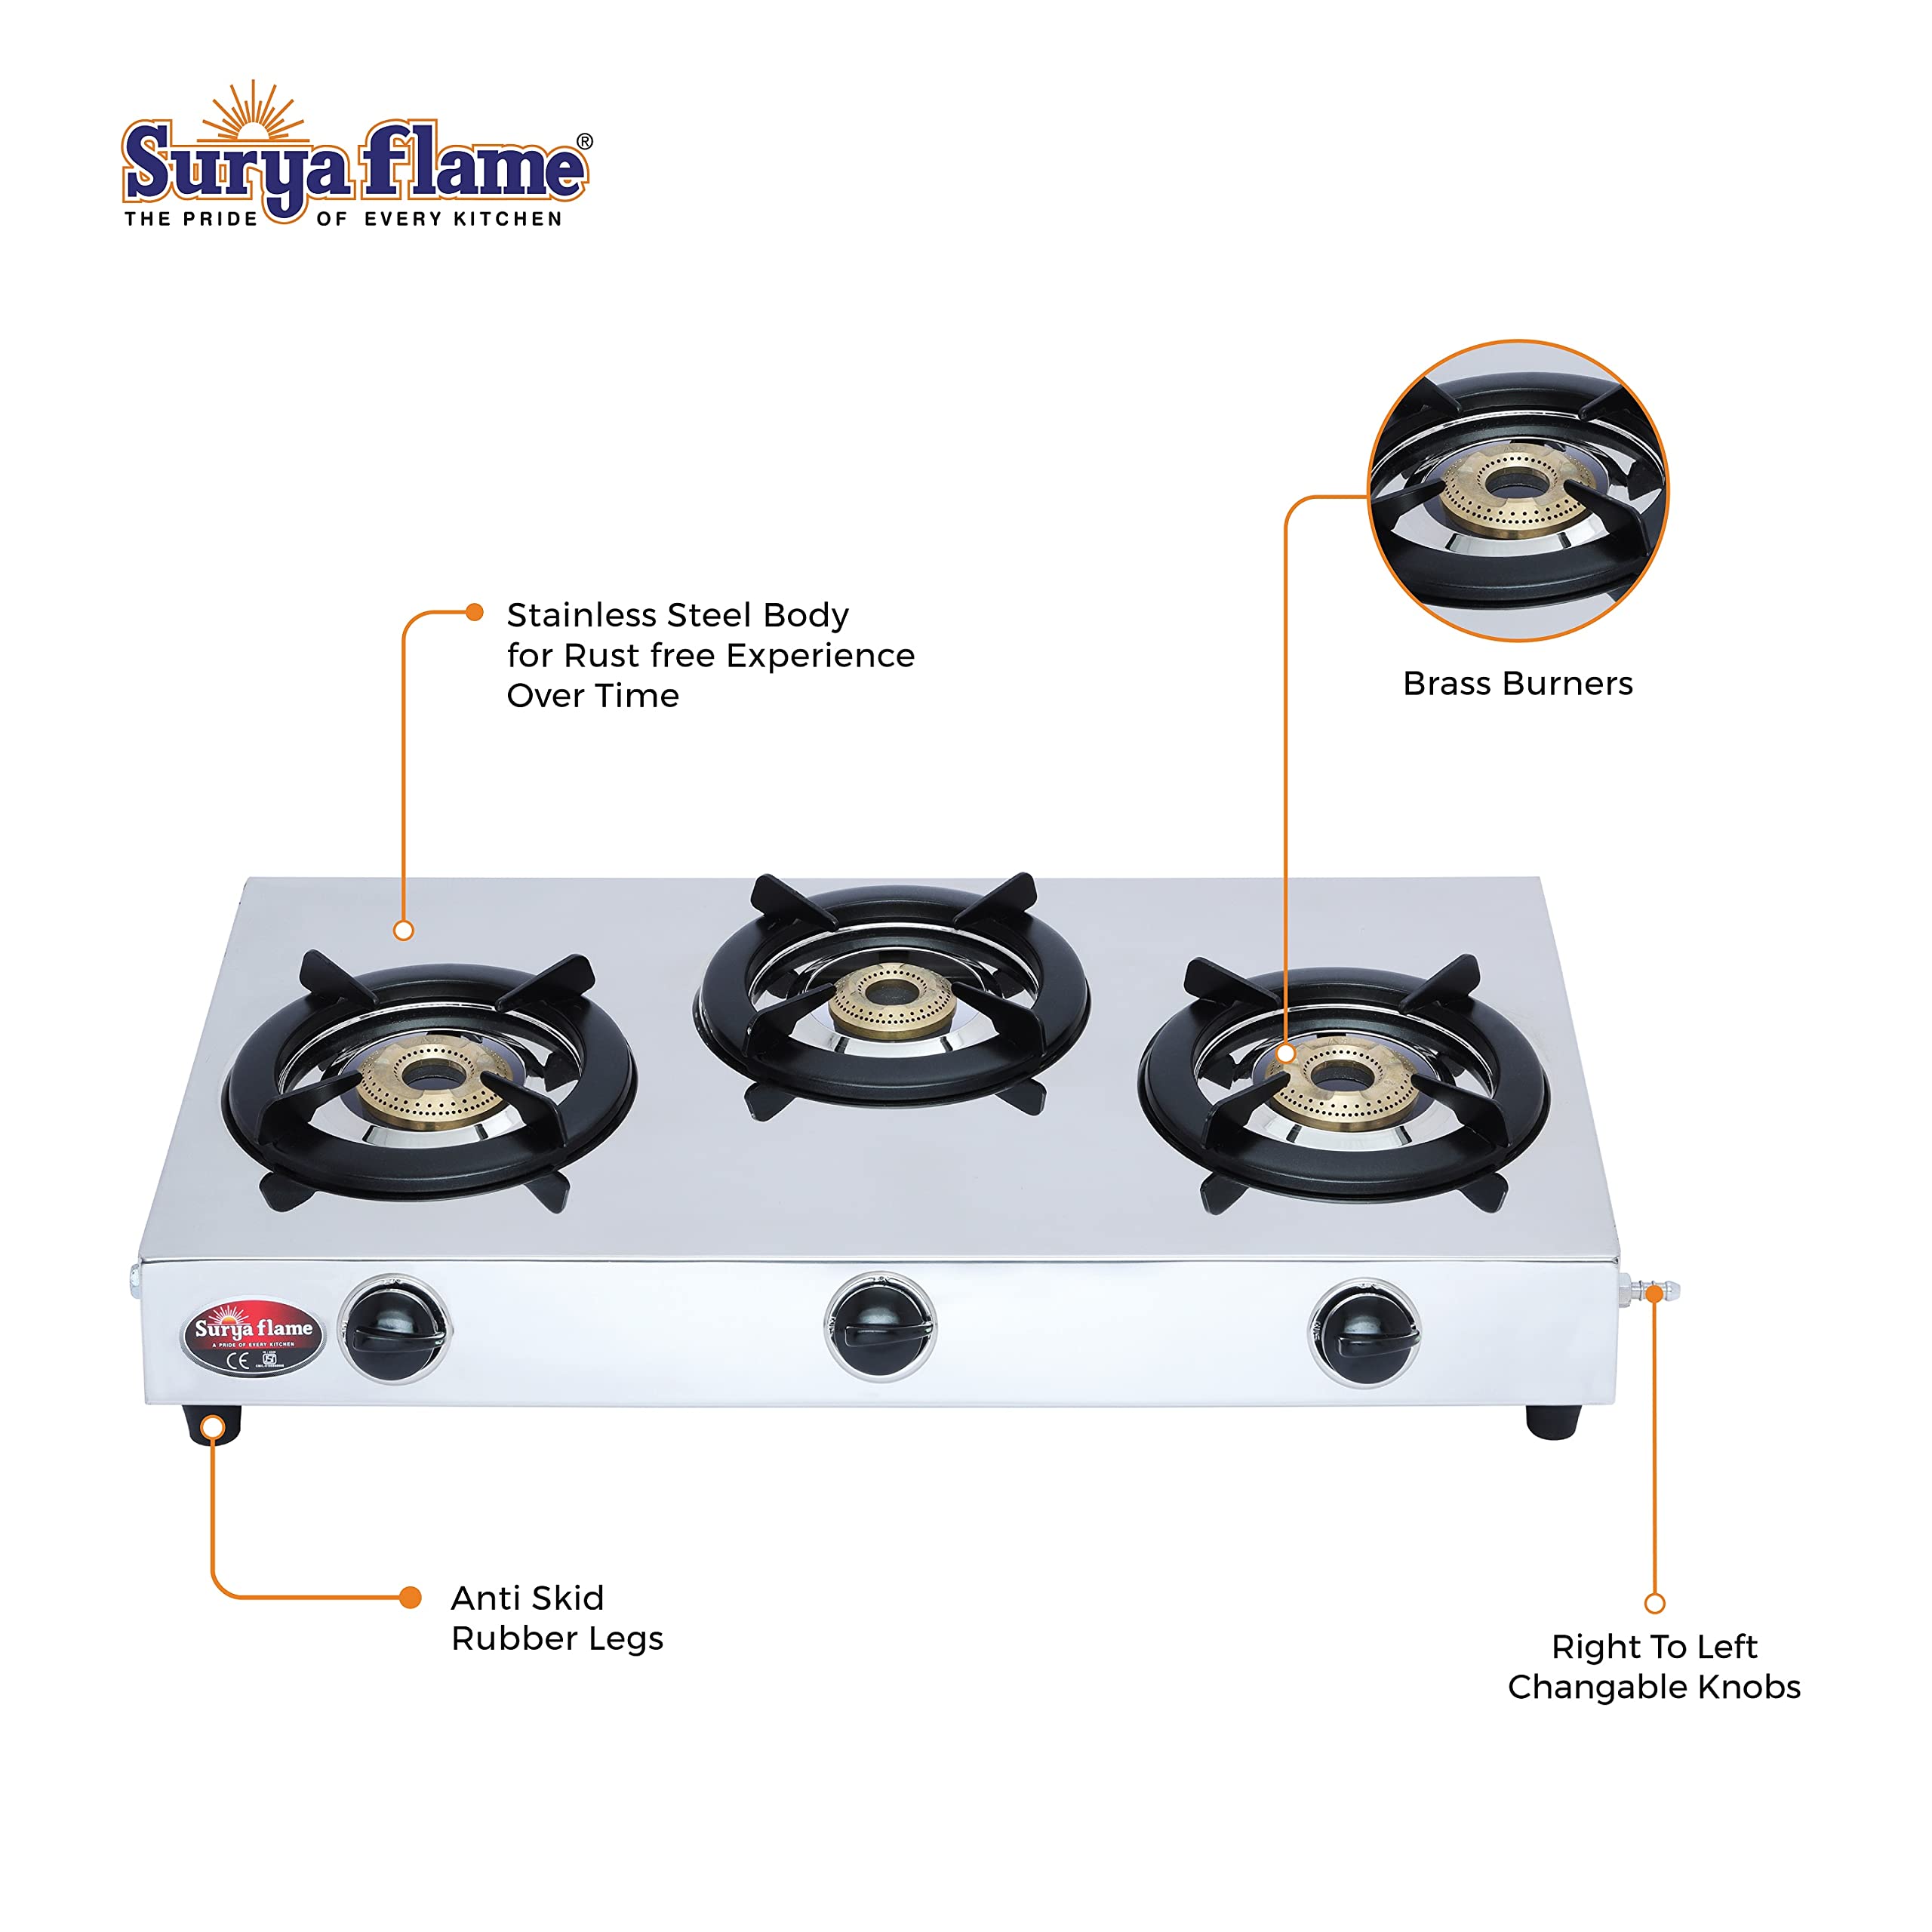 Surya Flame Triple Cook Gas Stove 3 Burners | Stainless Steel Body | Manual LPG Gas Stove | Sleek Desing Body With Anti Skid Rubber Legs - 2 Years Complete Doorstep Warranty (2)